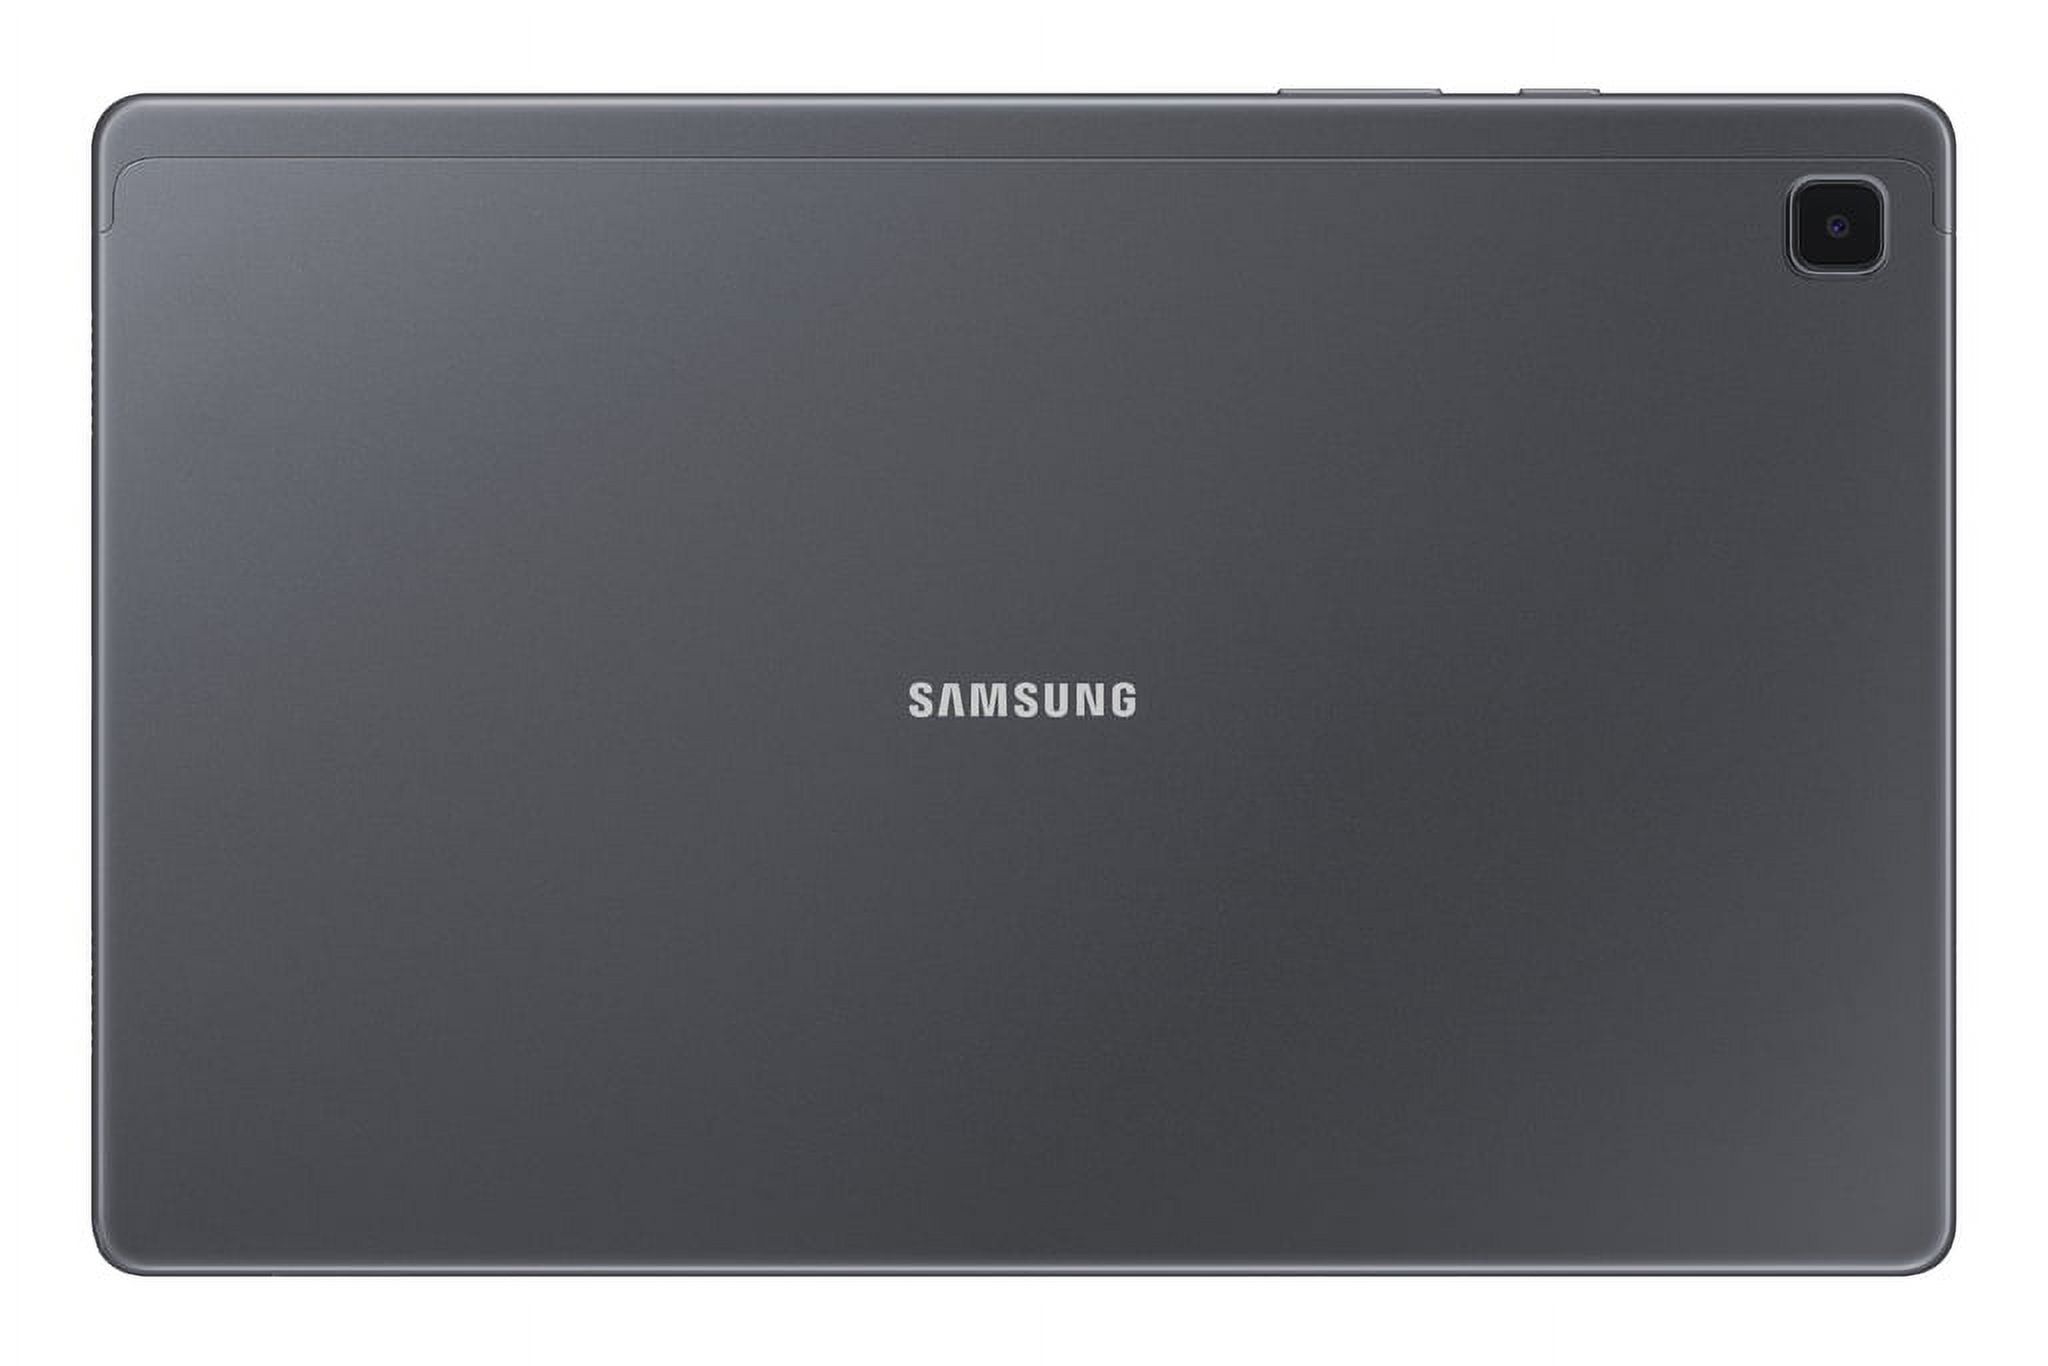 SAMSUNG Galaxy Tab A7 64GB 10.4" Wi-Fi Gray - SM-T500NZAEXAR - image 3 of 19